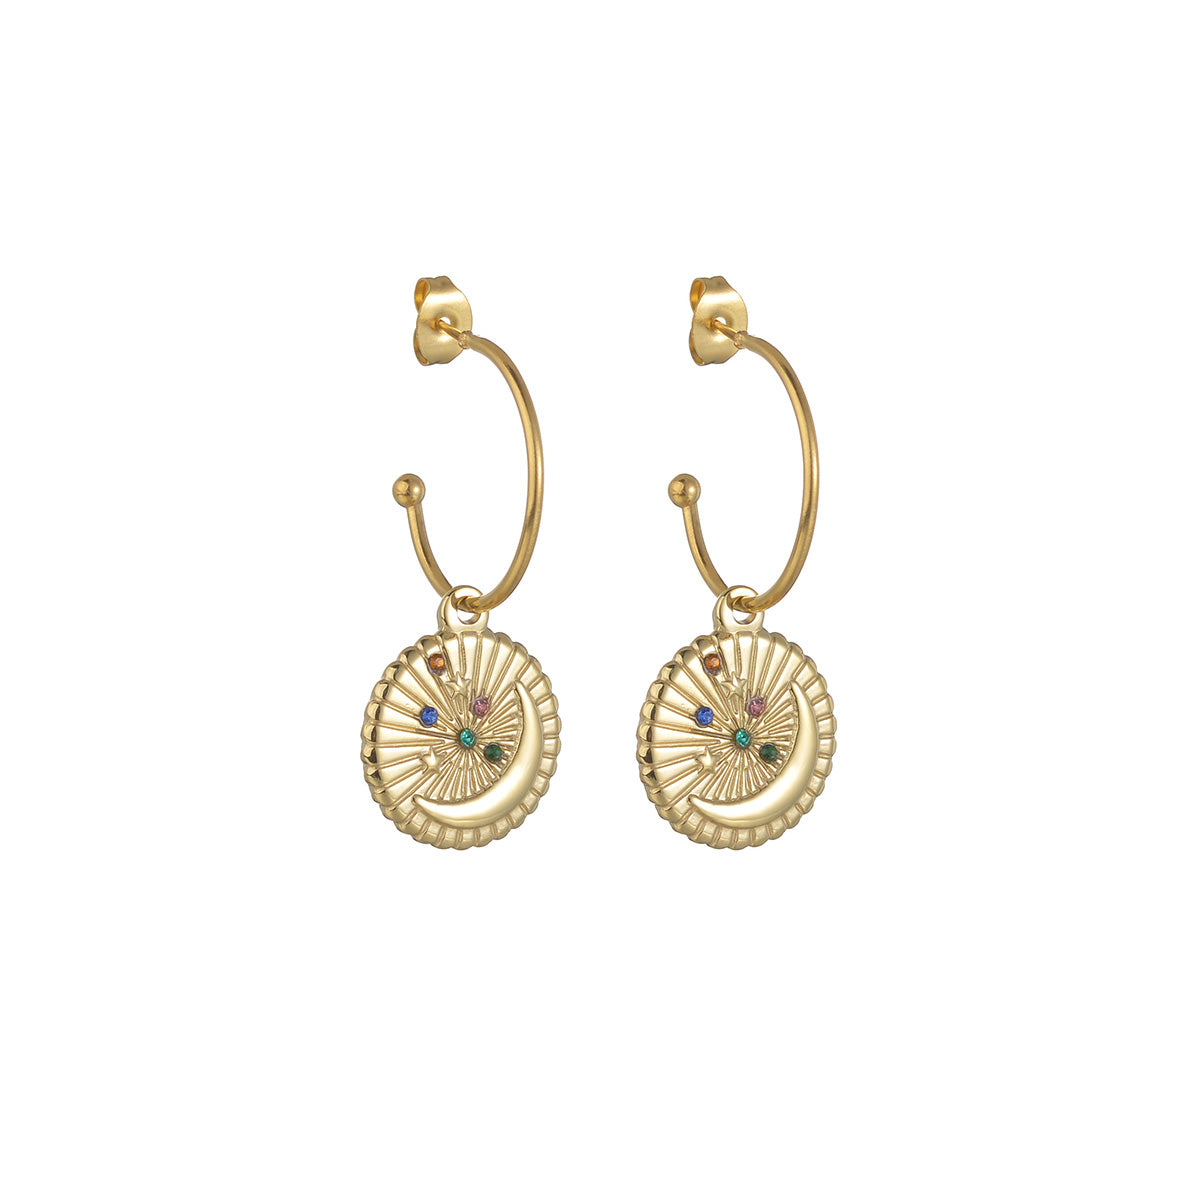 Luxe Moon | 14K Gold Plated Earrings